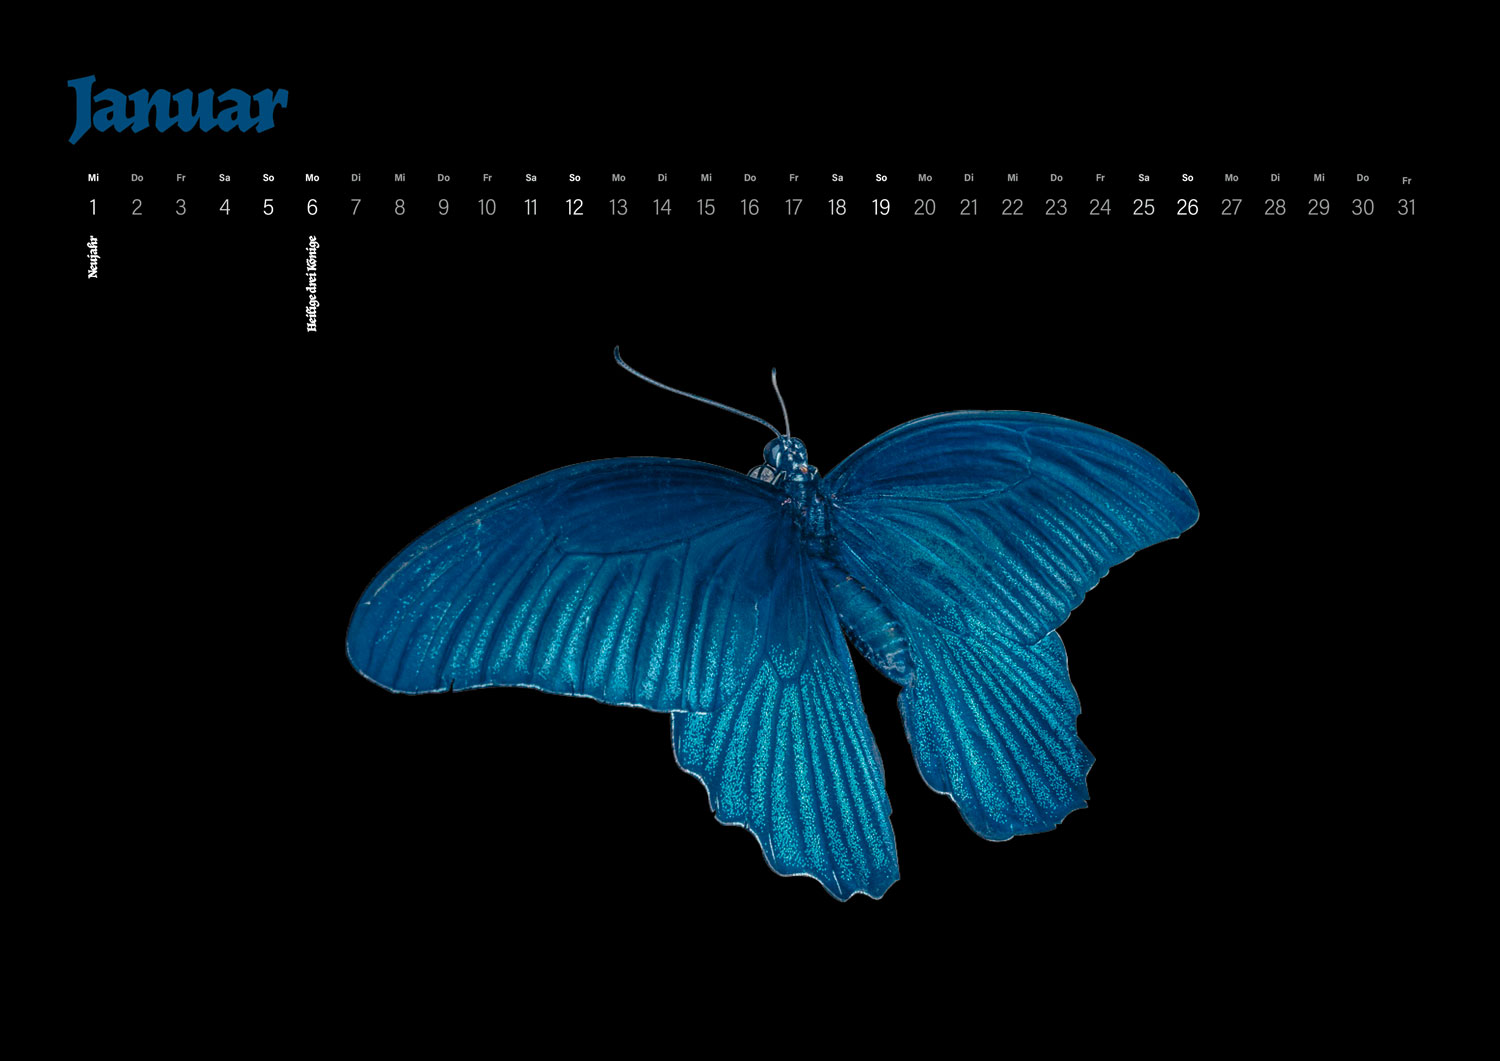 Calidario PANTONE calendar 2020 in January with a butterfly motif